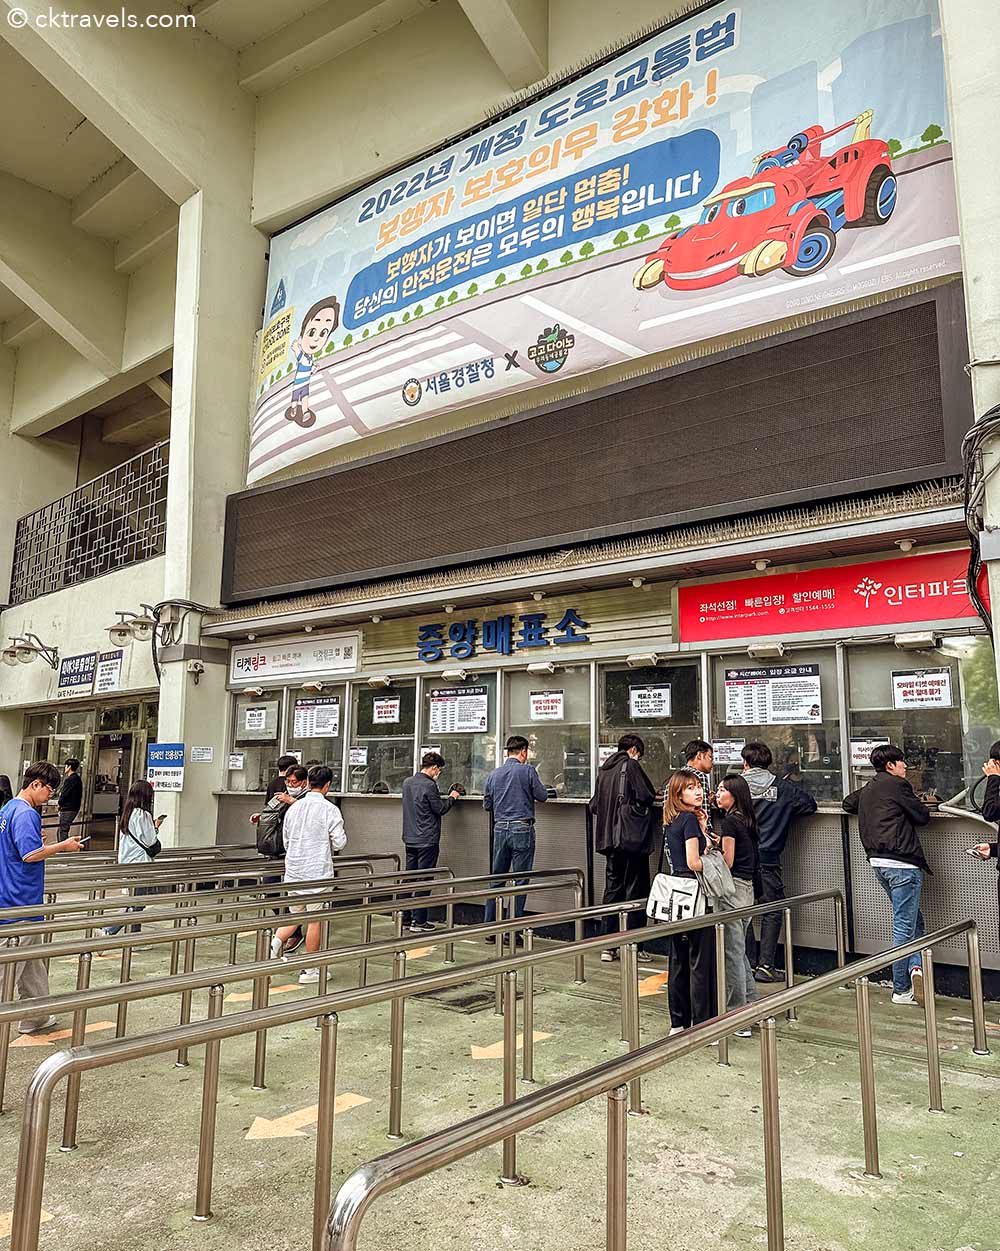 Buying KBO / Seoul Baseball Tickets  at Jamsil stadium